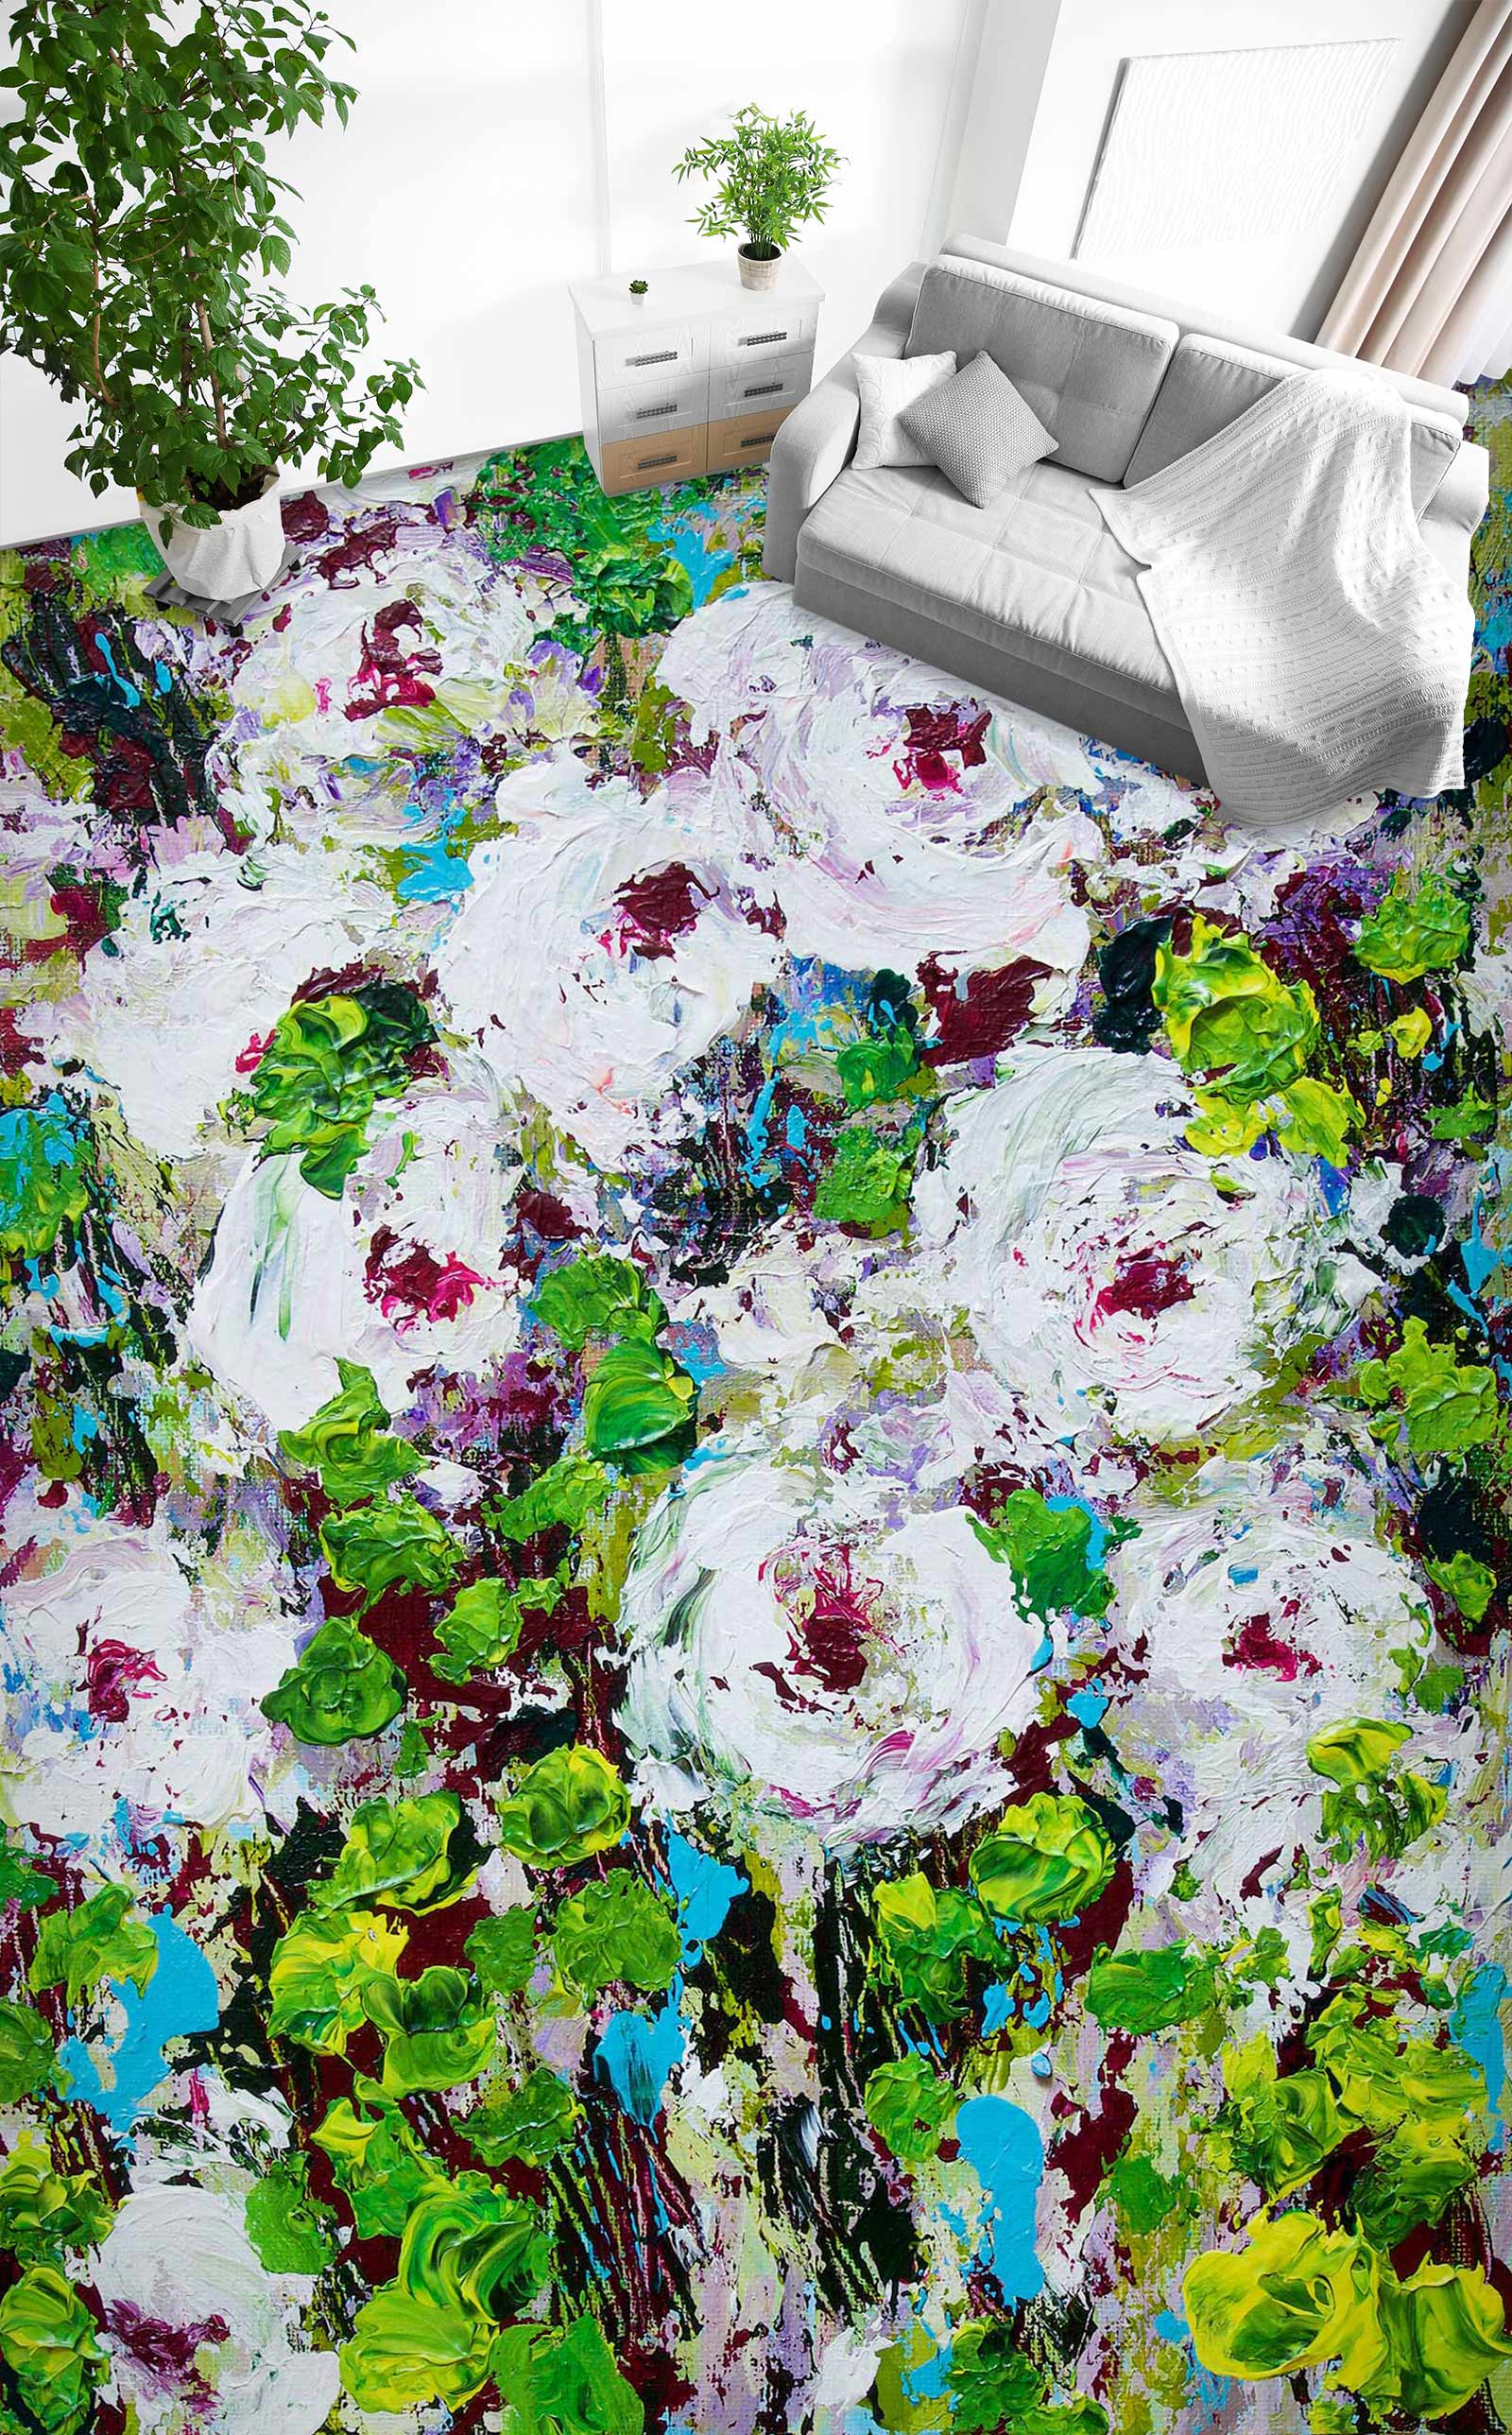 3D Oil Painting Garden Flowers 96109 Allan P. Friedlander Floor Mural  Wallpaper Murals Self-Adhesive Removable Print Epoxy